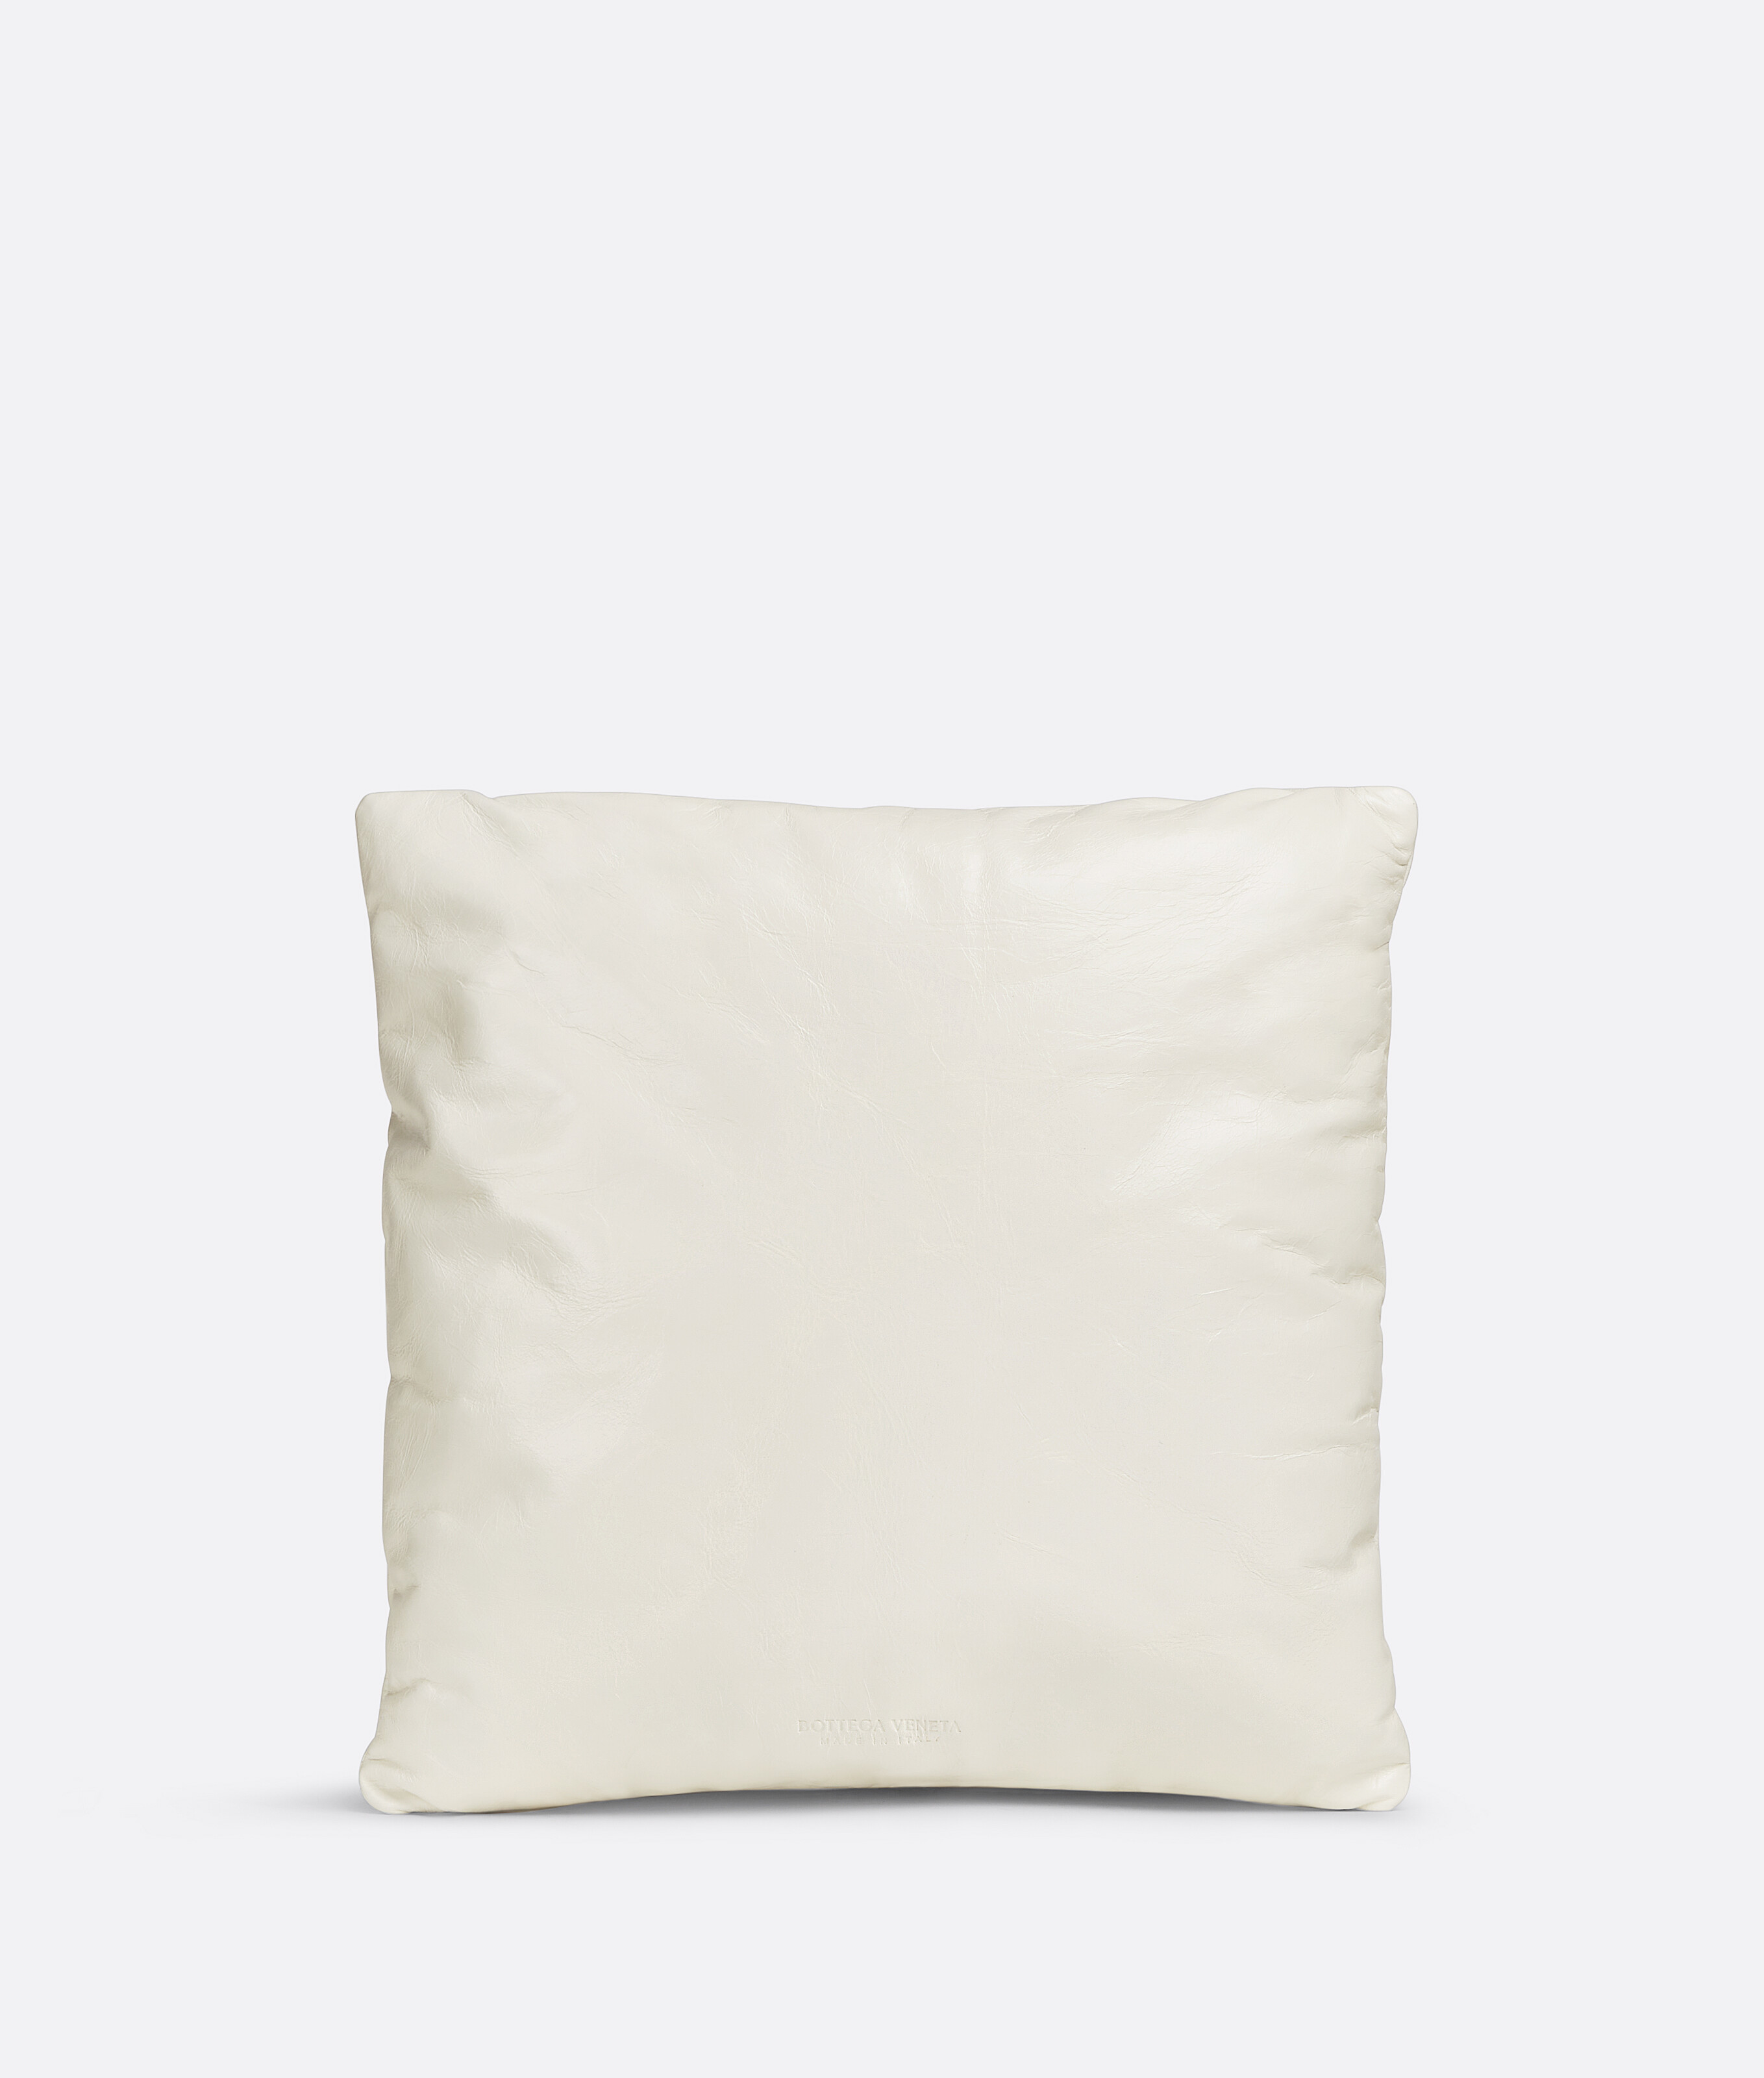 Bottega Veneta Nodini Bag Shapers - Bagpad custom handbag pillow